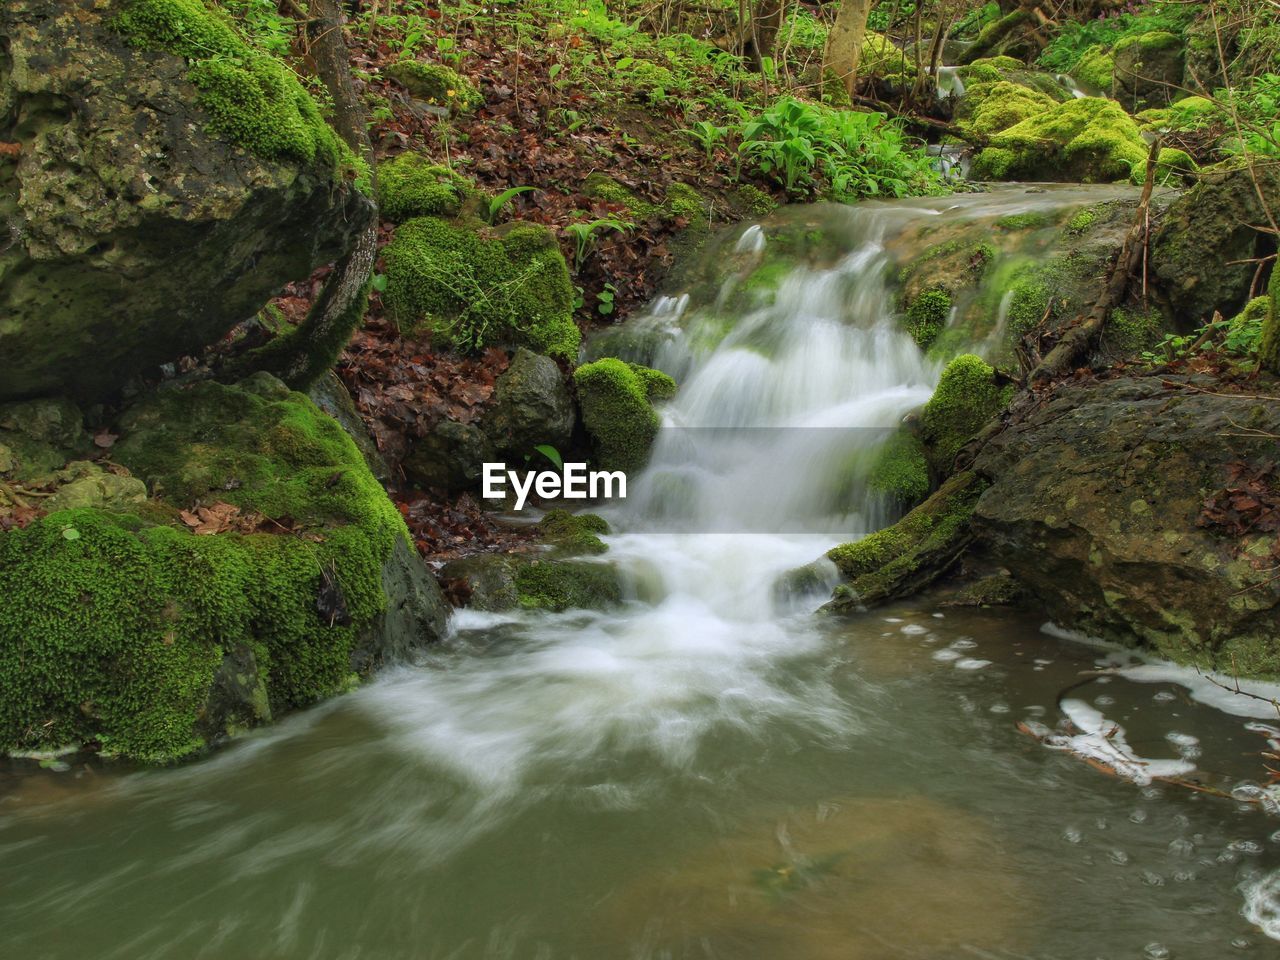 Stream flowing by rocks in forest